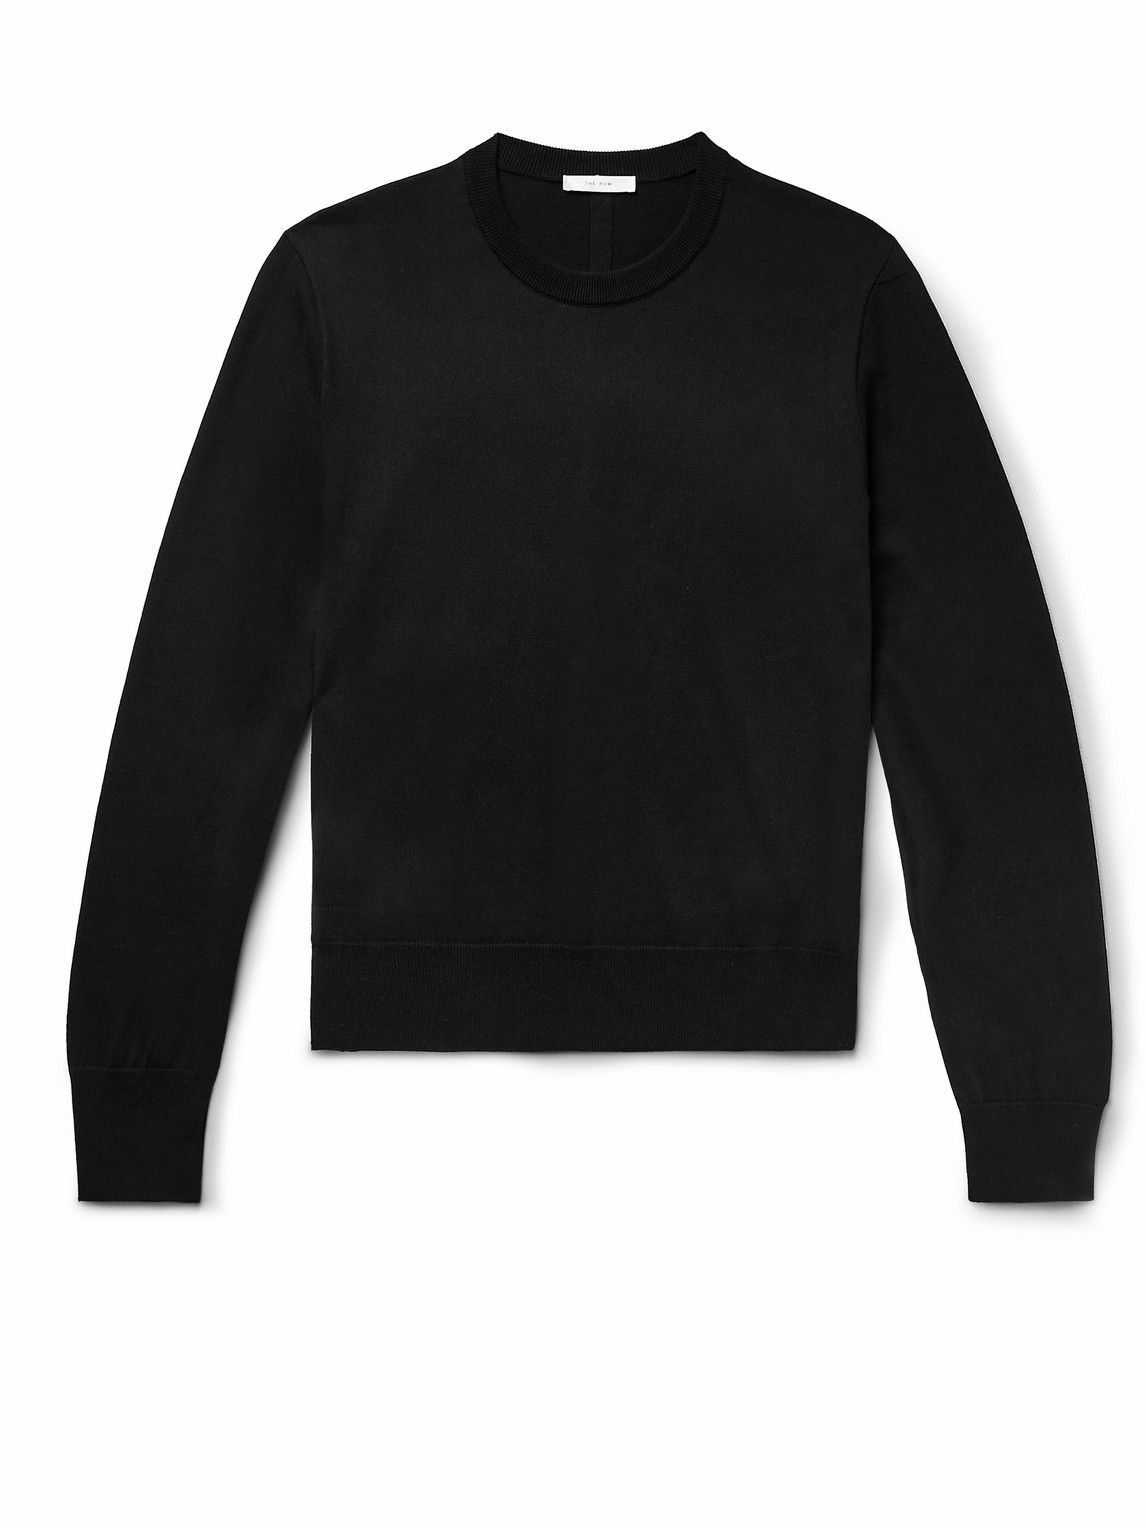 The Row - Panetti Cotton Sweater - Black The Row